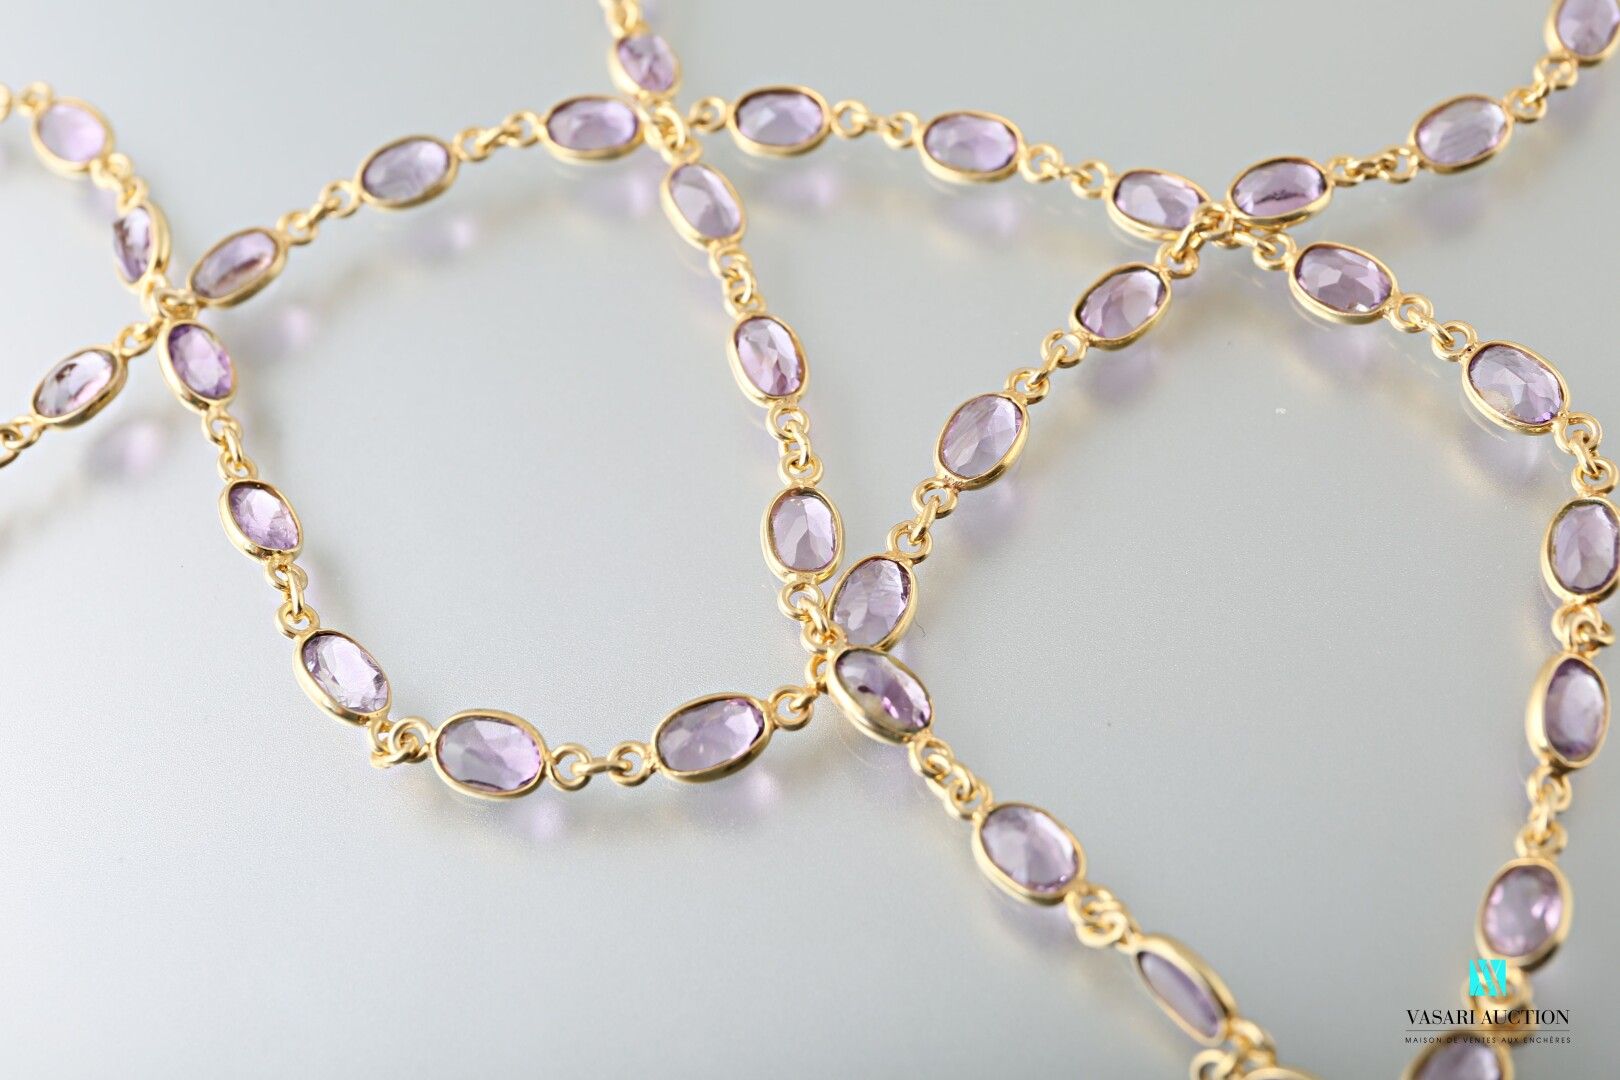 Null 圆形和椭圆形交替排列的青铜项链，椭圆形上镶嵌着紫晶石

毛重：19.8克 长度：76厘米。